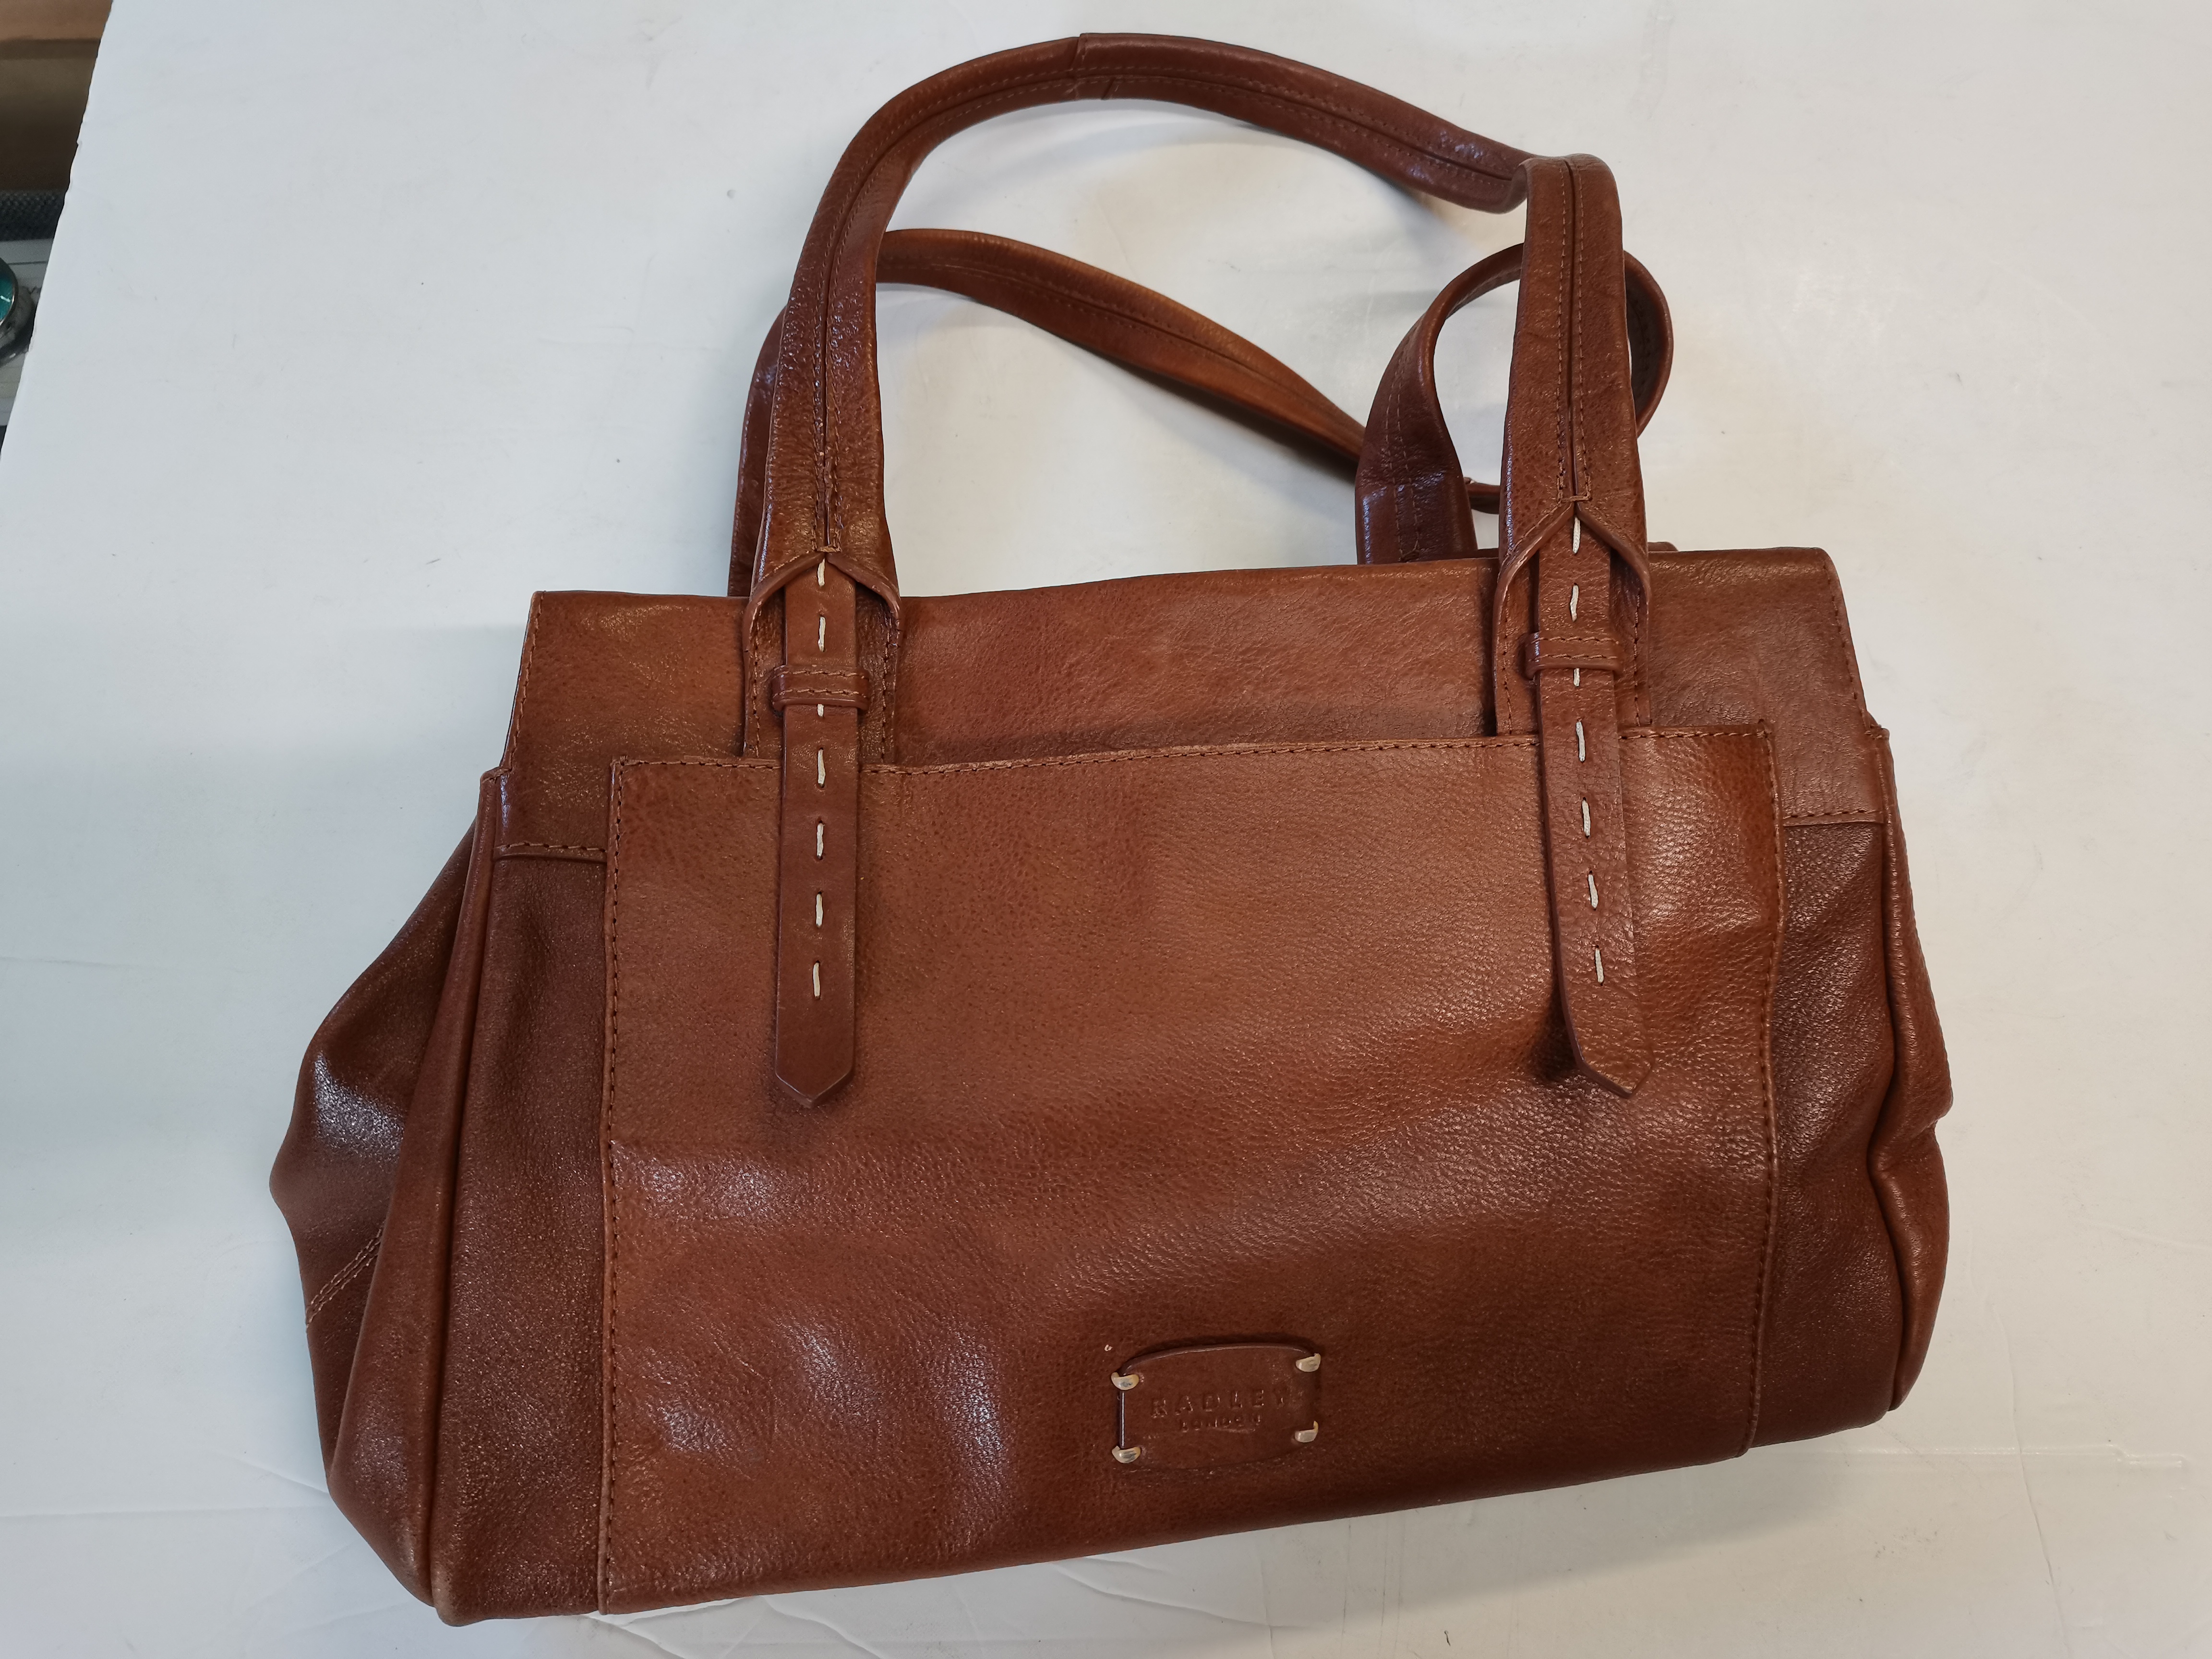 Brown Radley handbag with dust cover, slight wear - Image 2 of 3